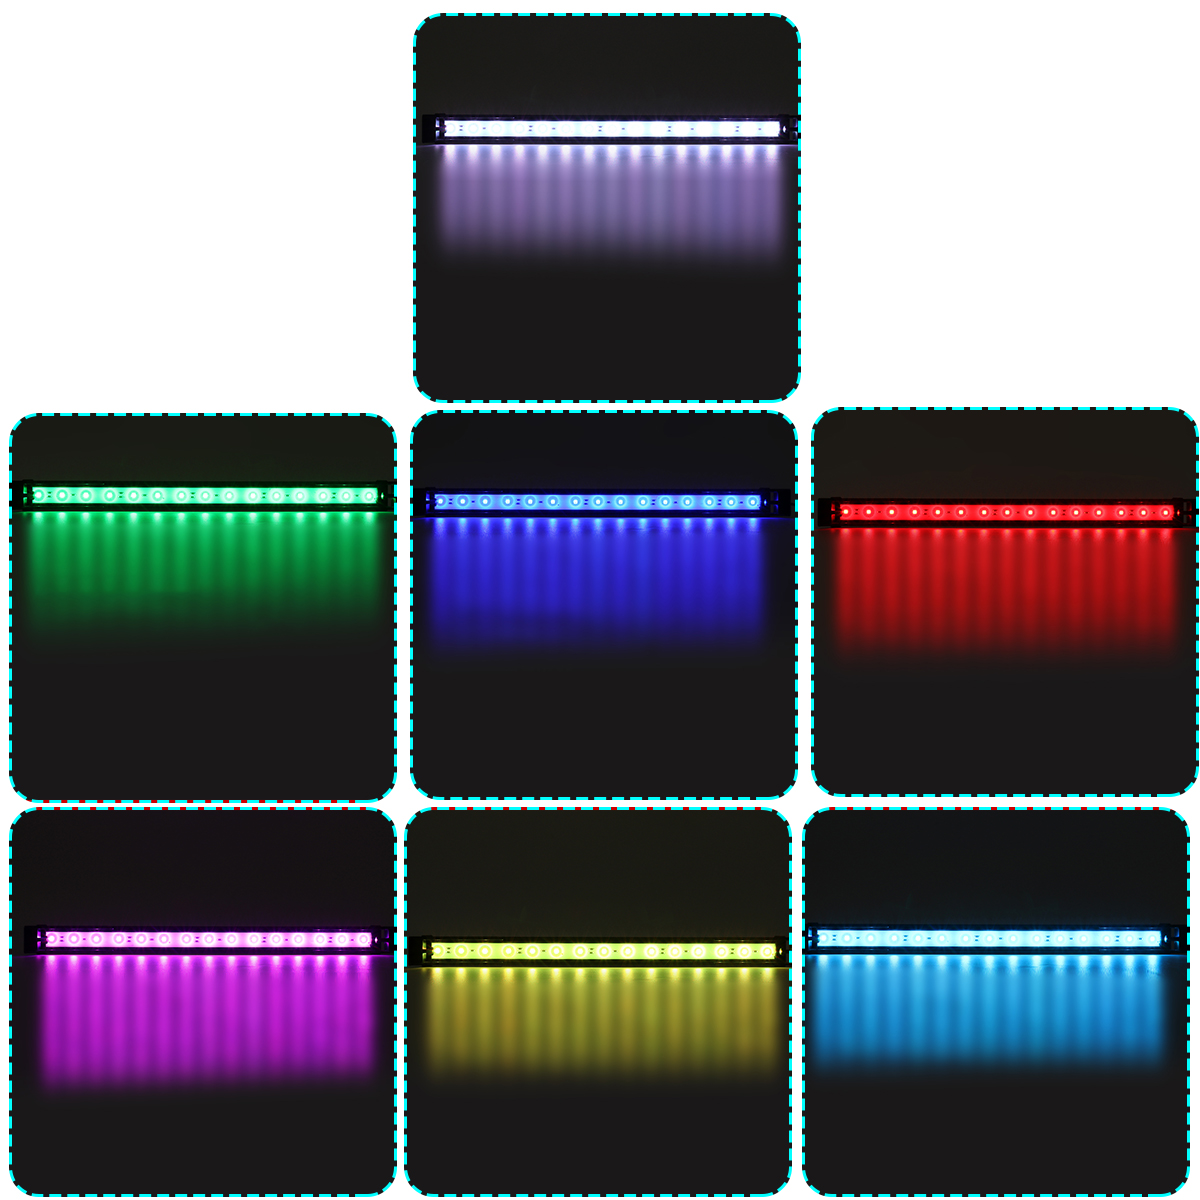 52CM-Aquarium-Cover-Lighting-Color-Change-Dimmable-LED-Light-Bar-Suitable-for-AquariumFish-Tank-with-1795199-2